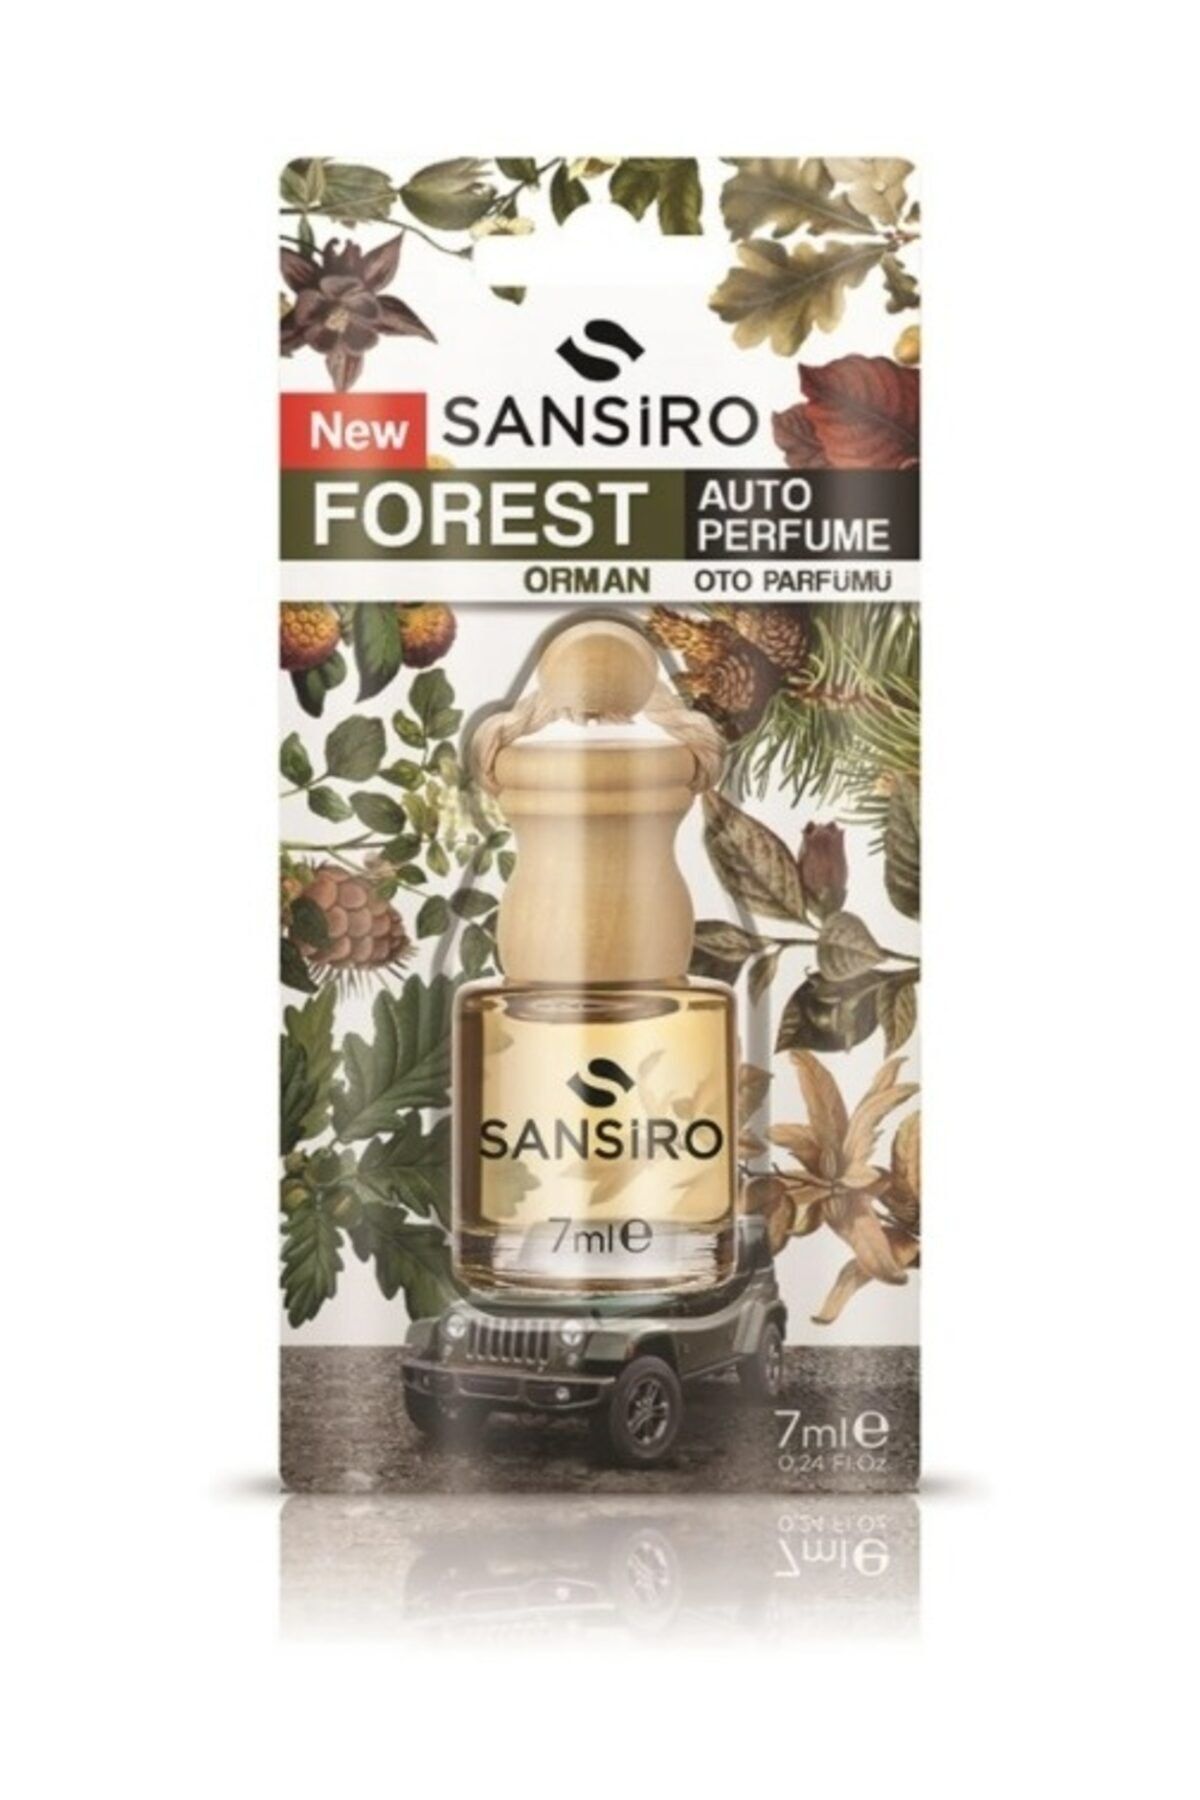 Sansiro Forest - Orman Odunsu Oto Kokusu Parfümü 7ml